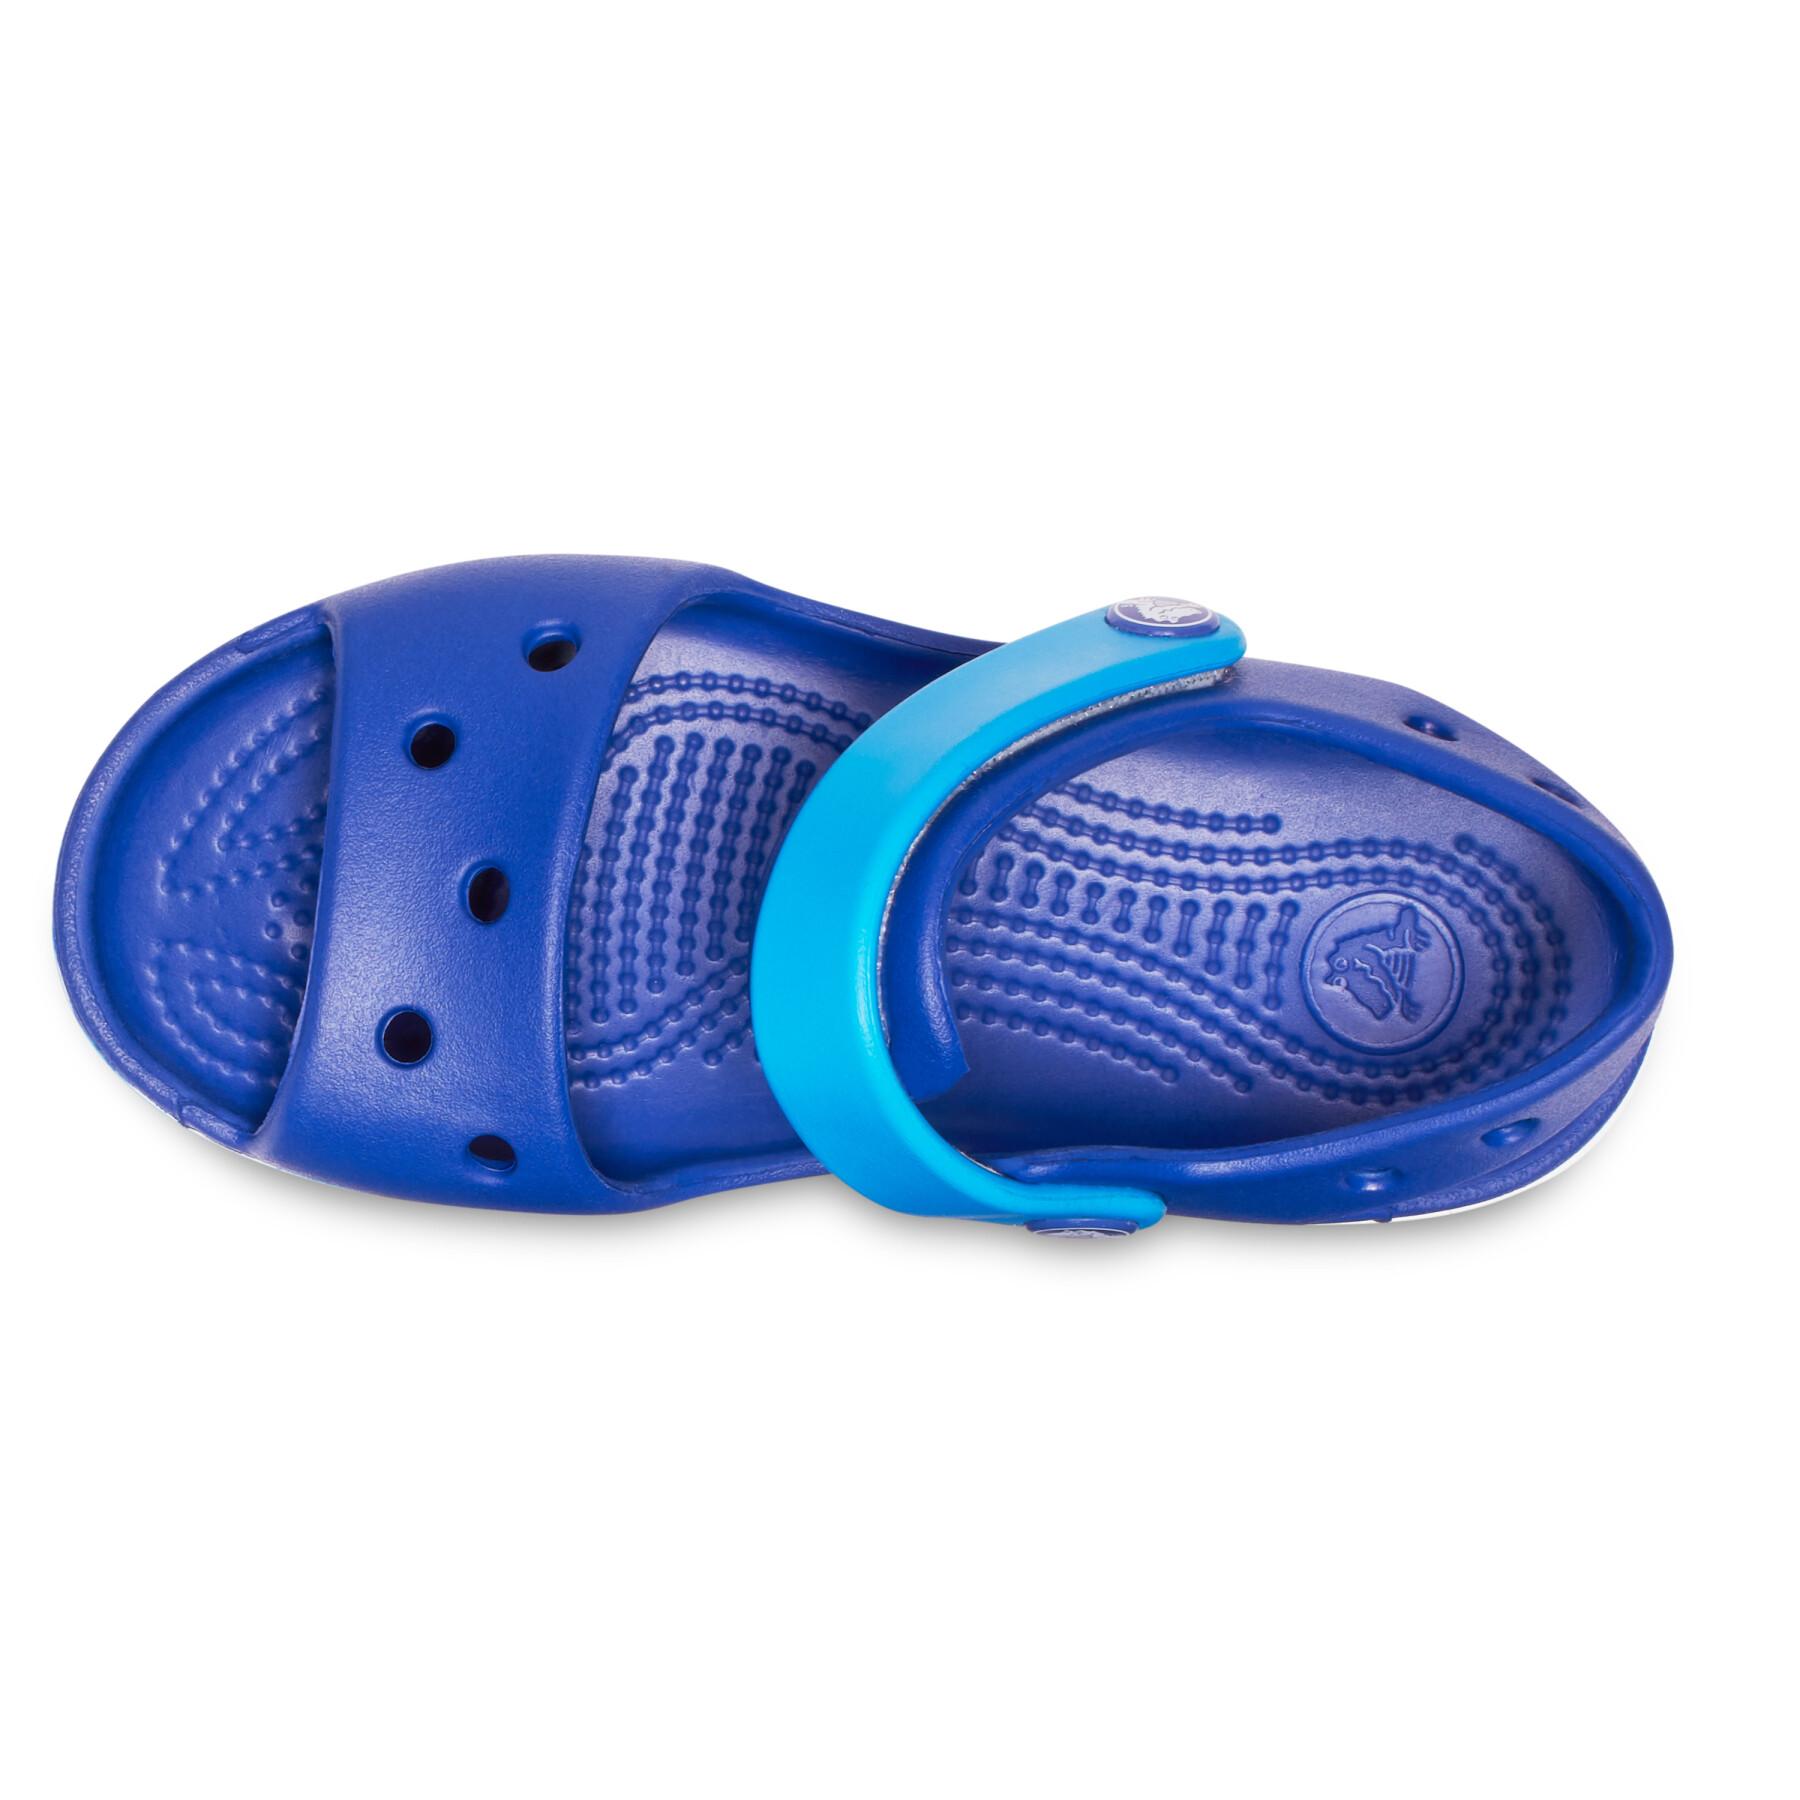 Children's sandals Crocs crocband™